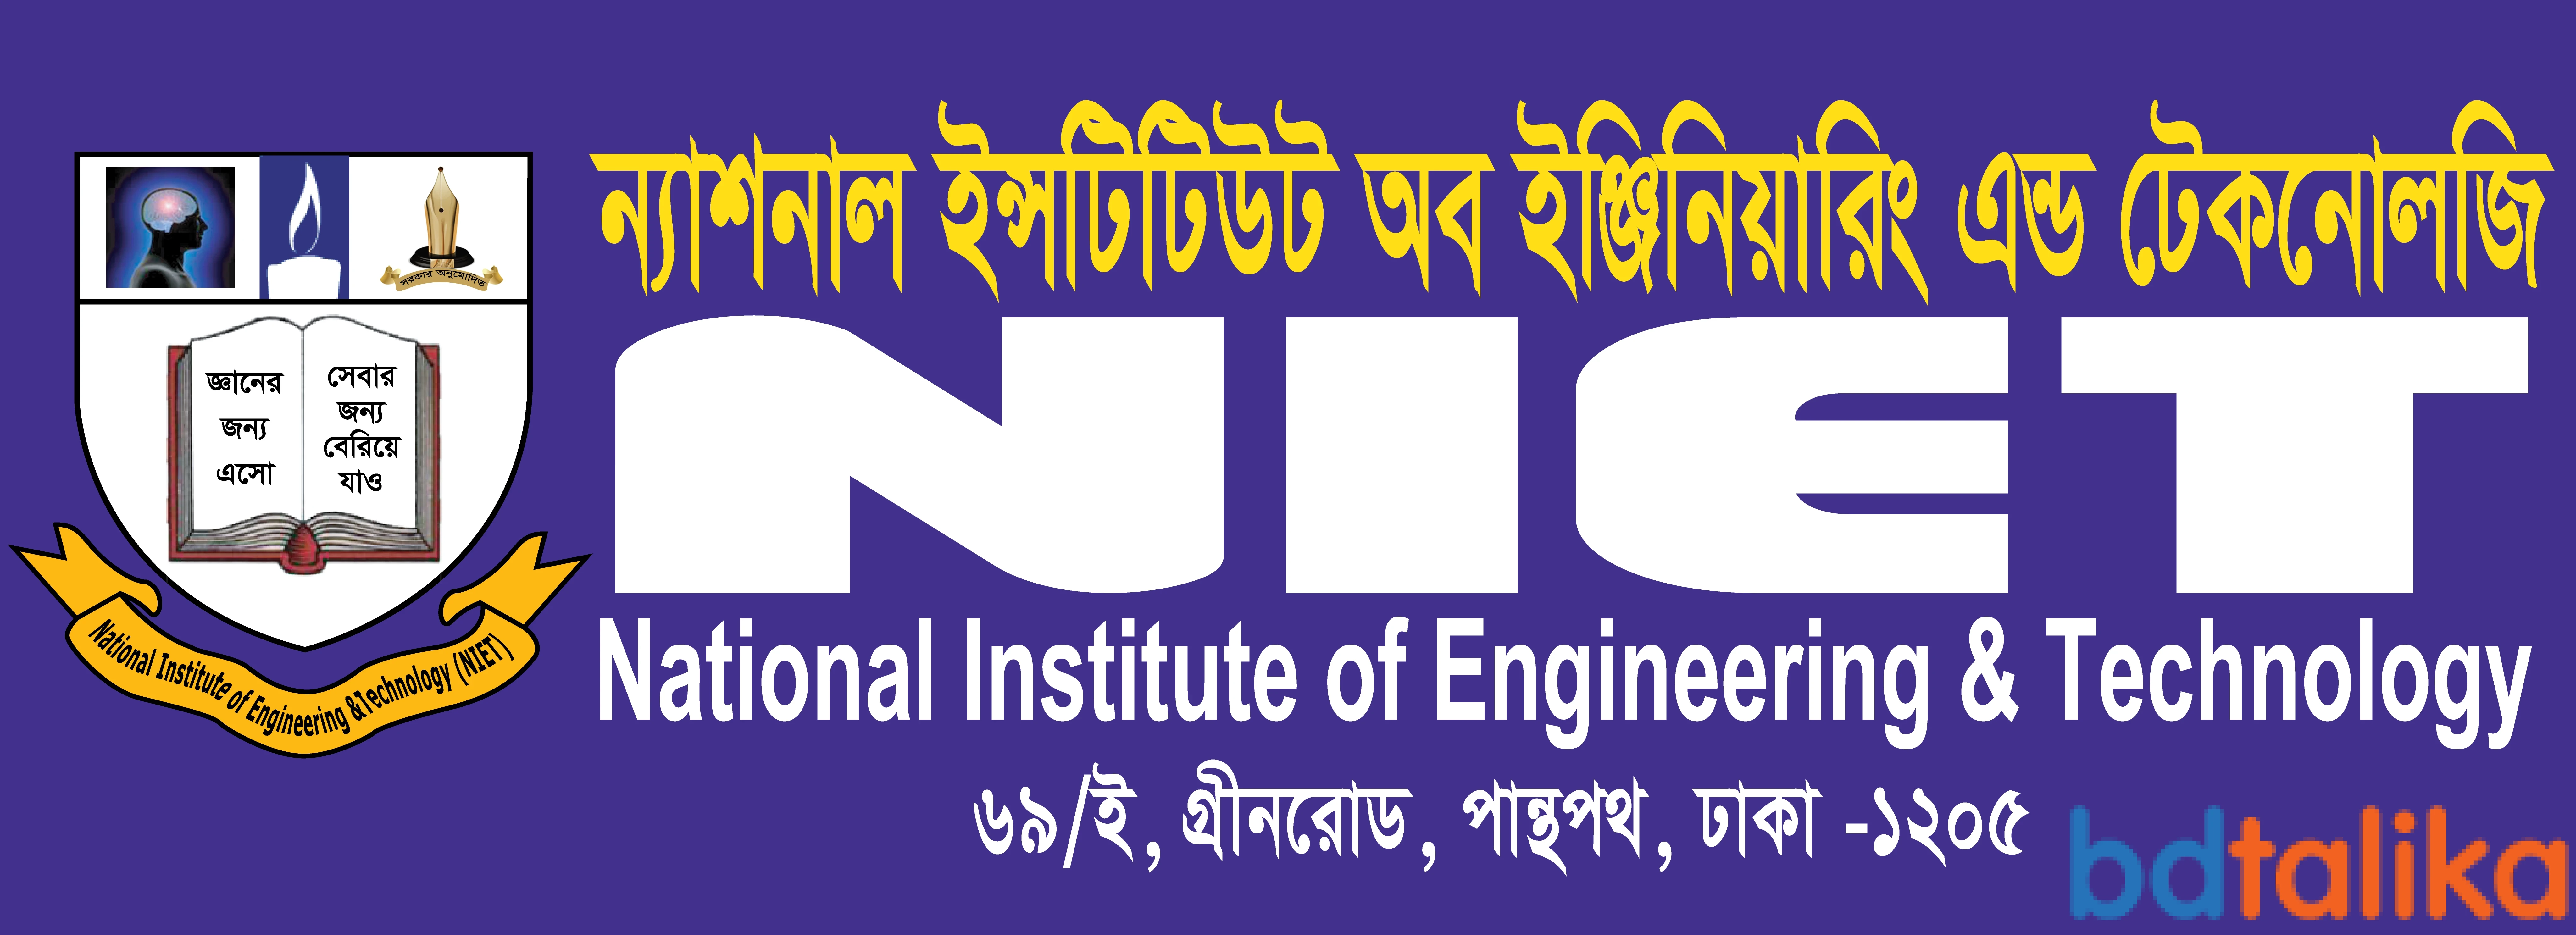 National Institute of Engineering & Technology (NIET) Bangladesh